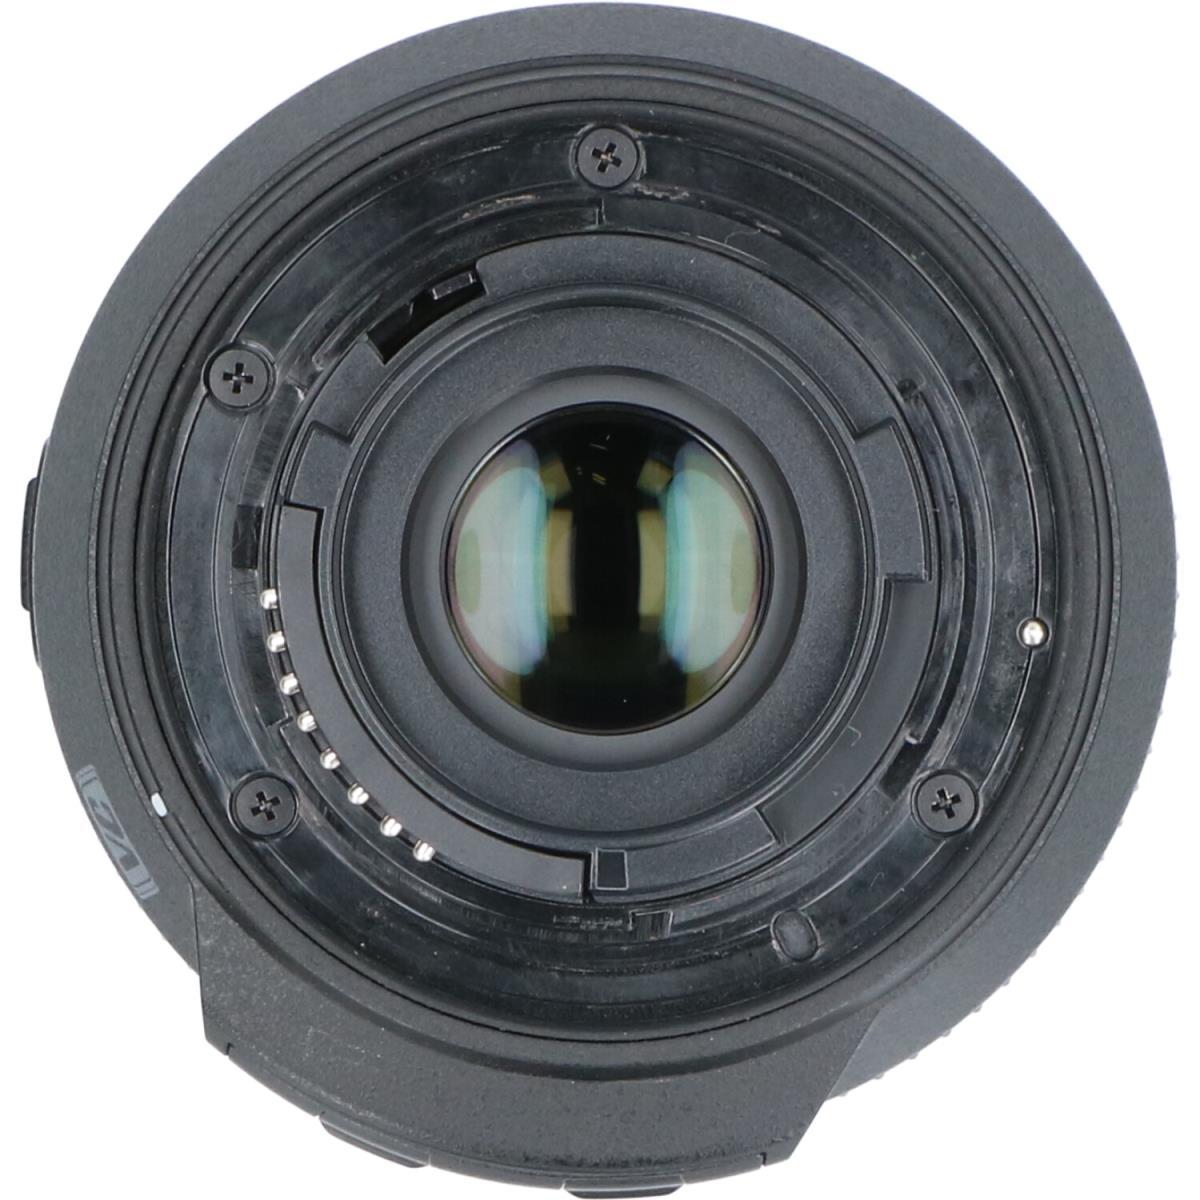 TAMRON Nikon (B018) 18-200mm F3.5-6.3VC